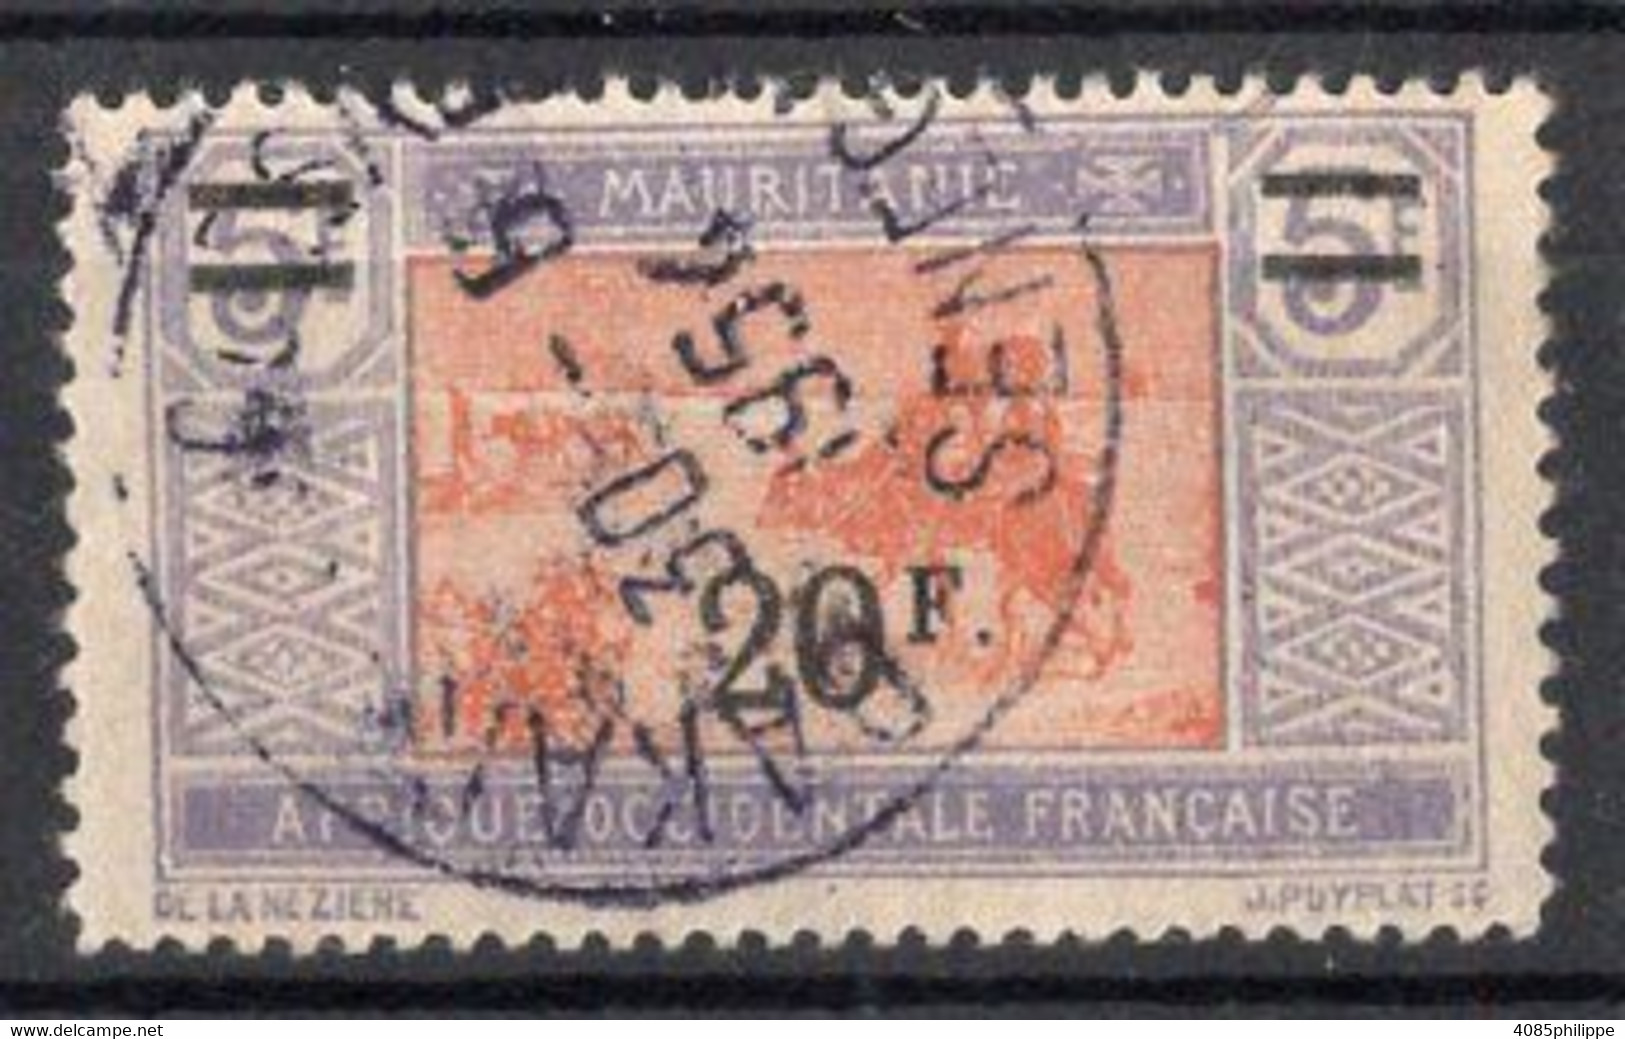 Mauritanie Timbre-poste N°56 Oblitéré TB Cote : 11€00 - Used Stamps